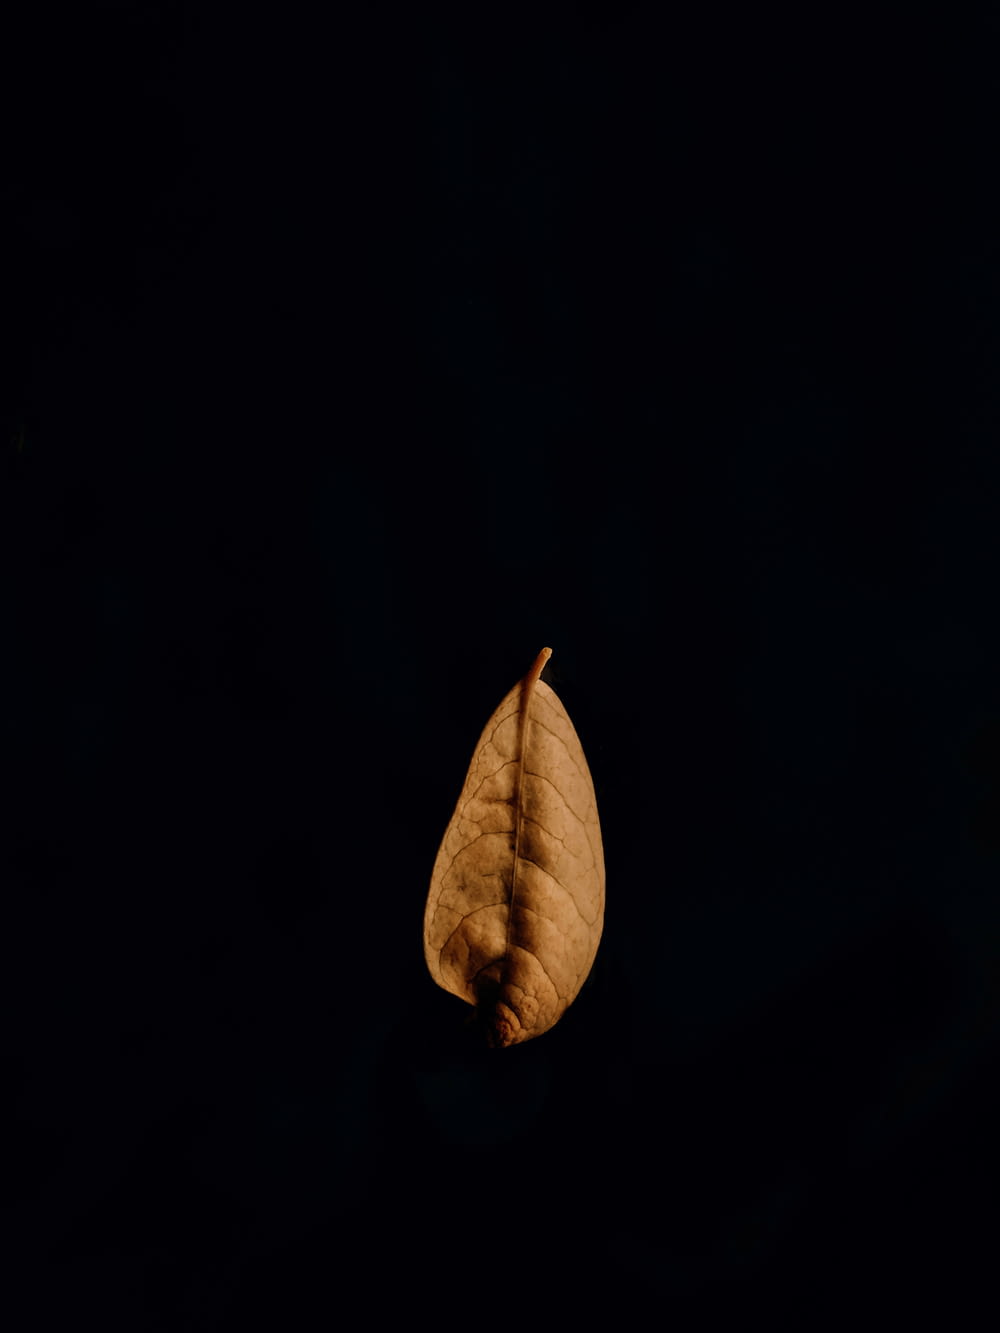 a leaf on a black background